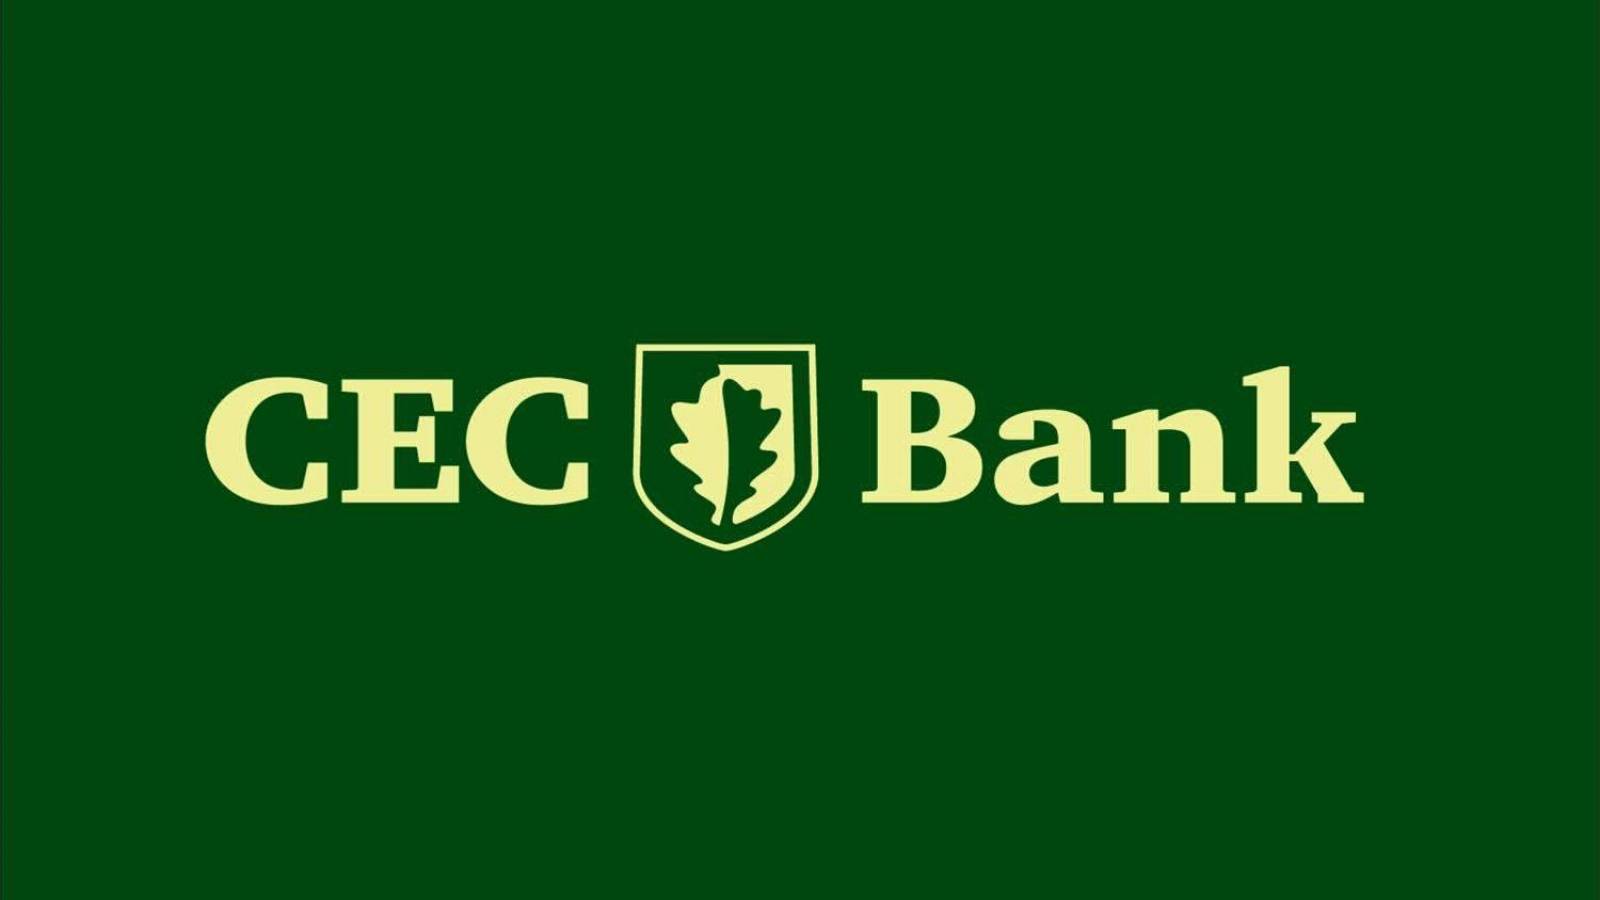 CEC Bank vigilance